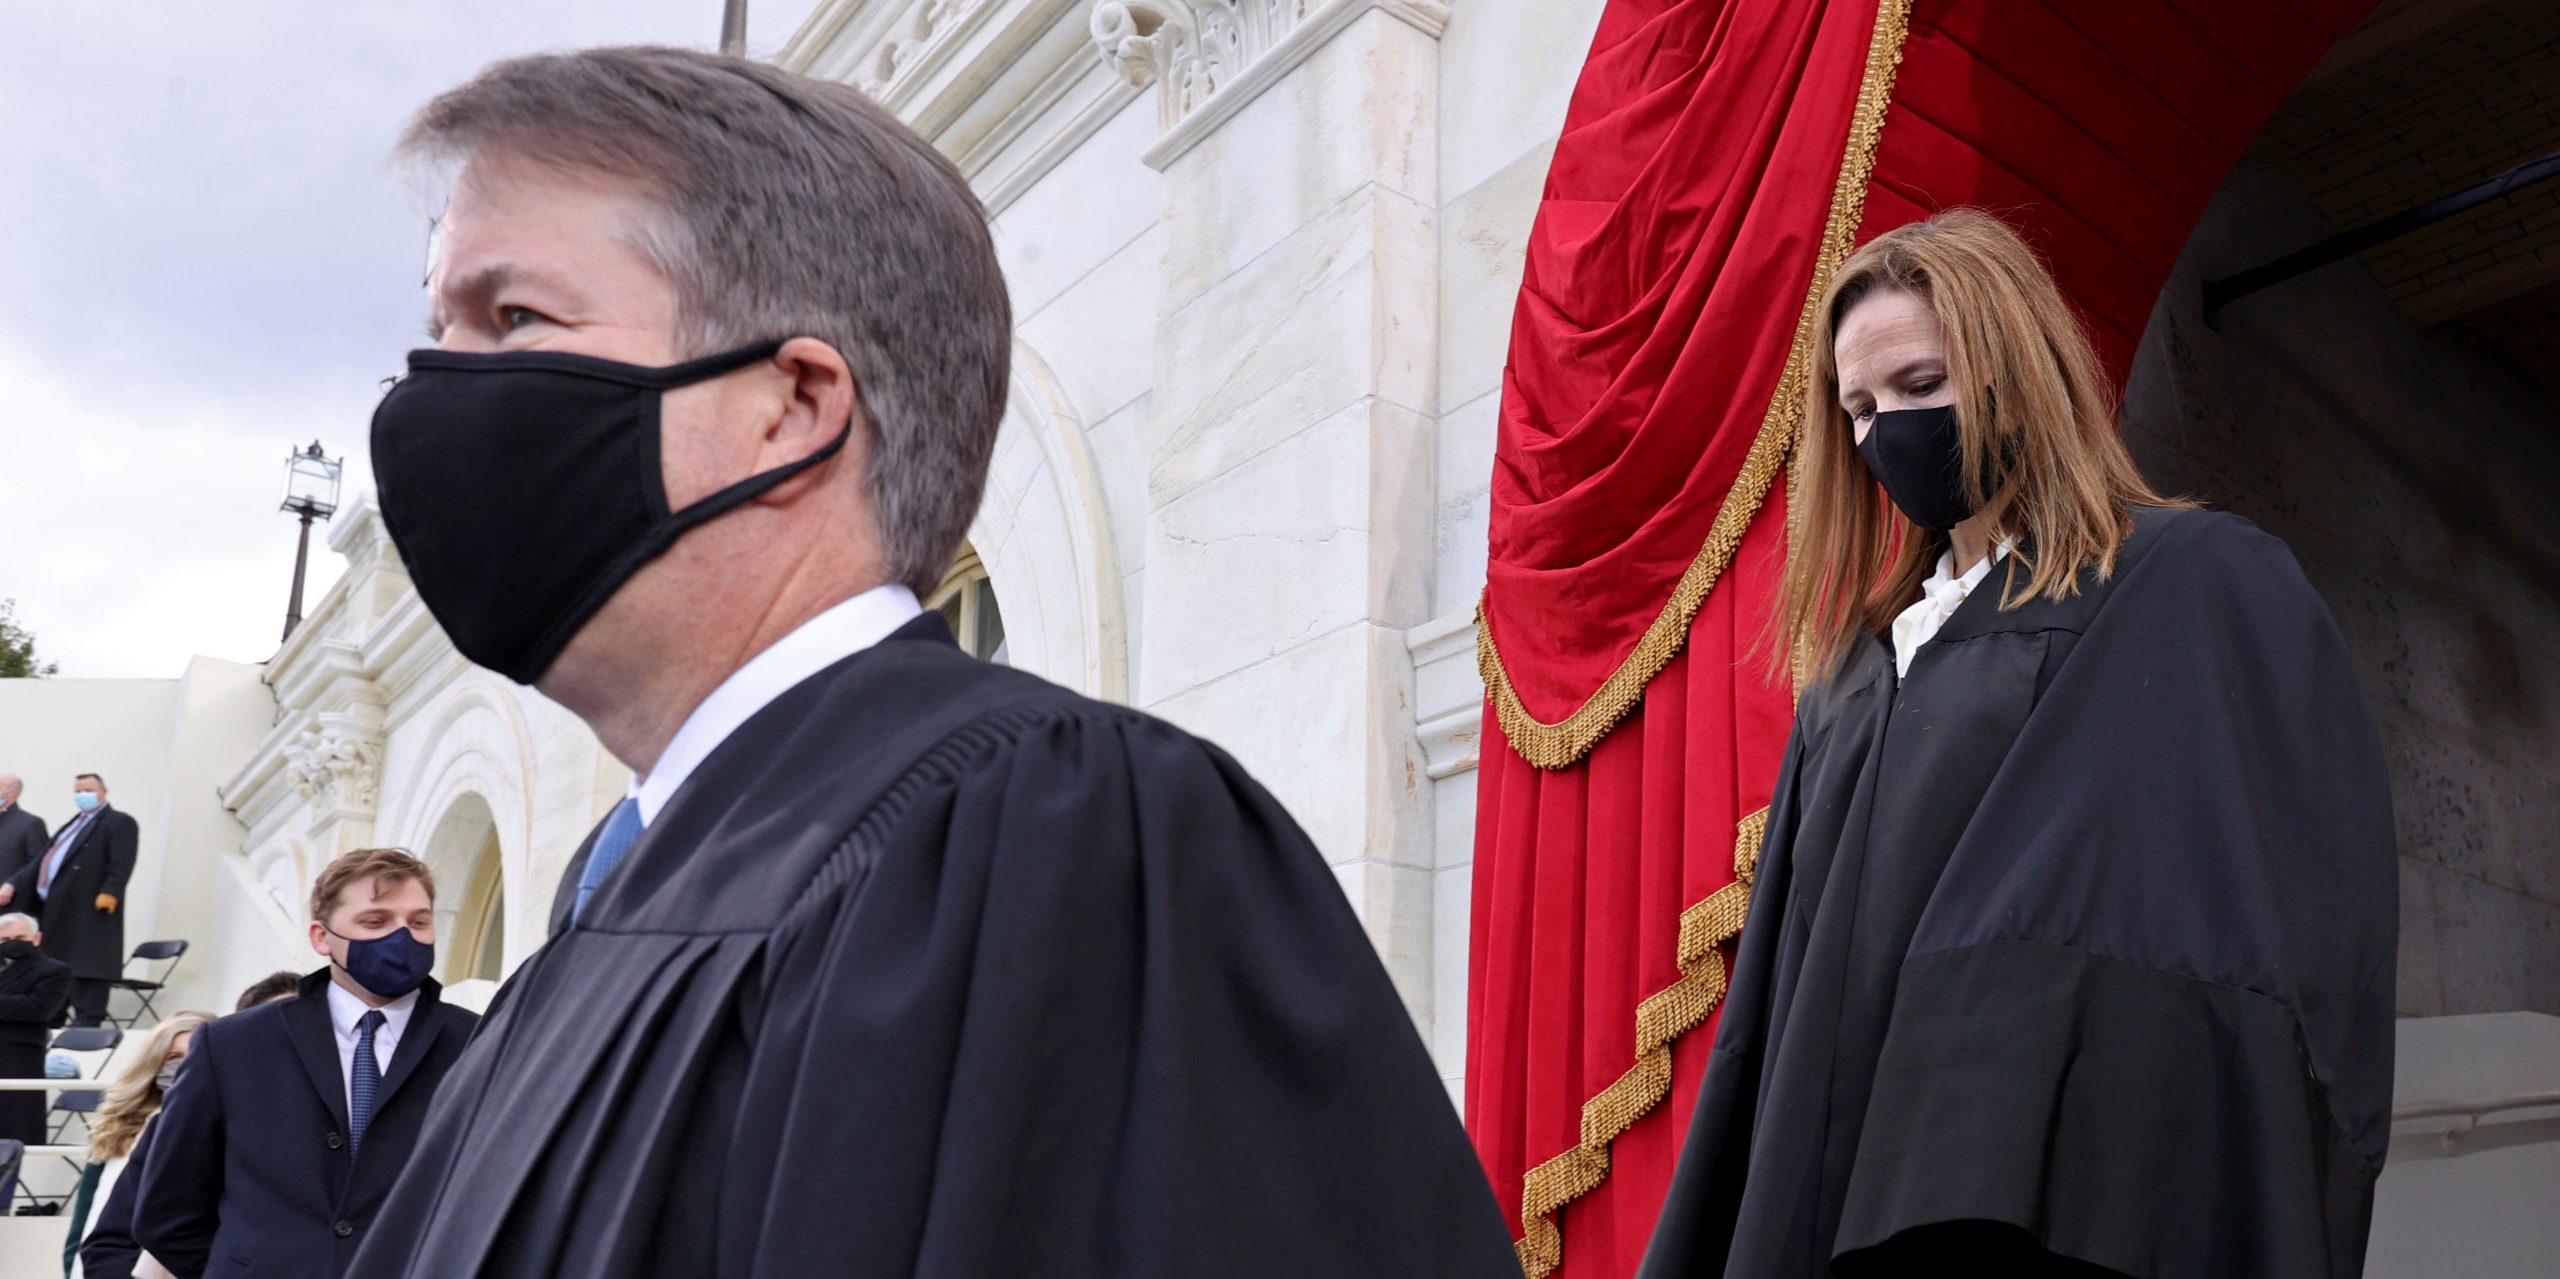 supreme court justices brett kavanaugh and amy coney barrett